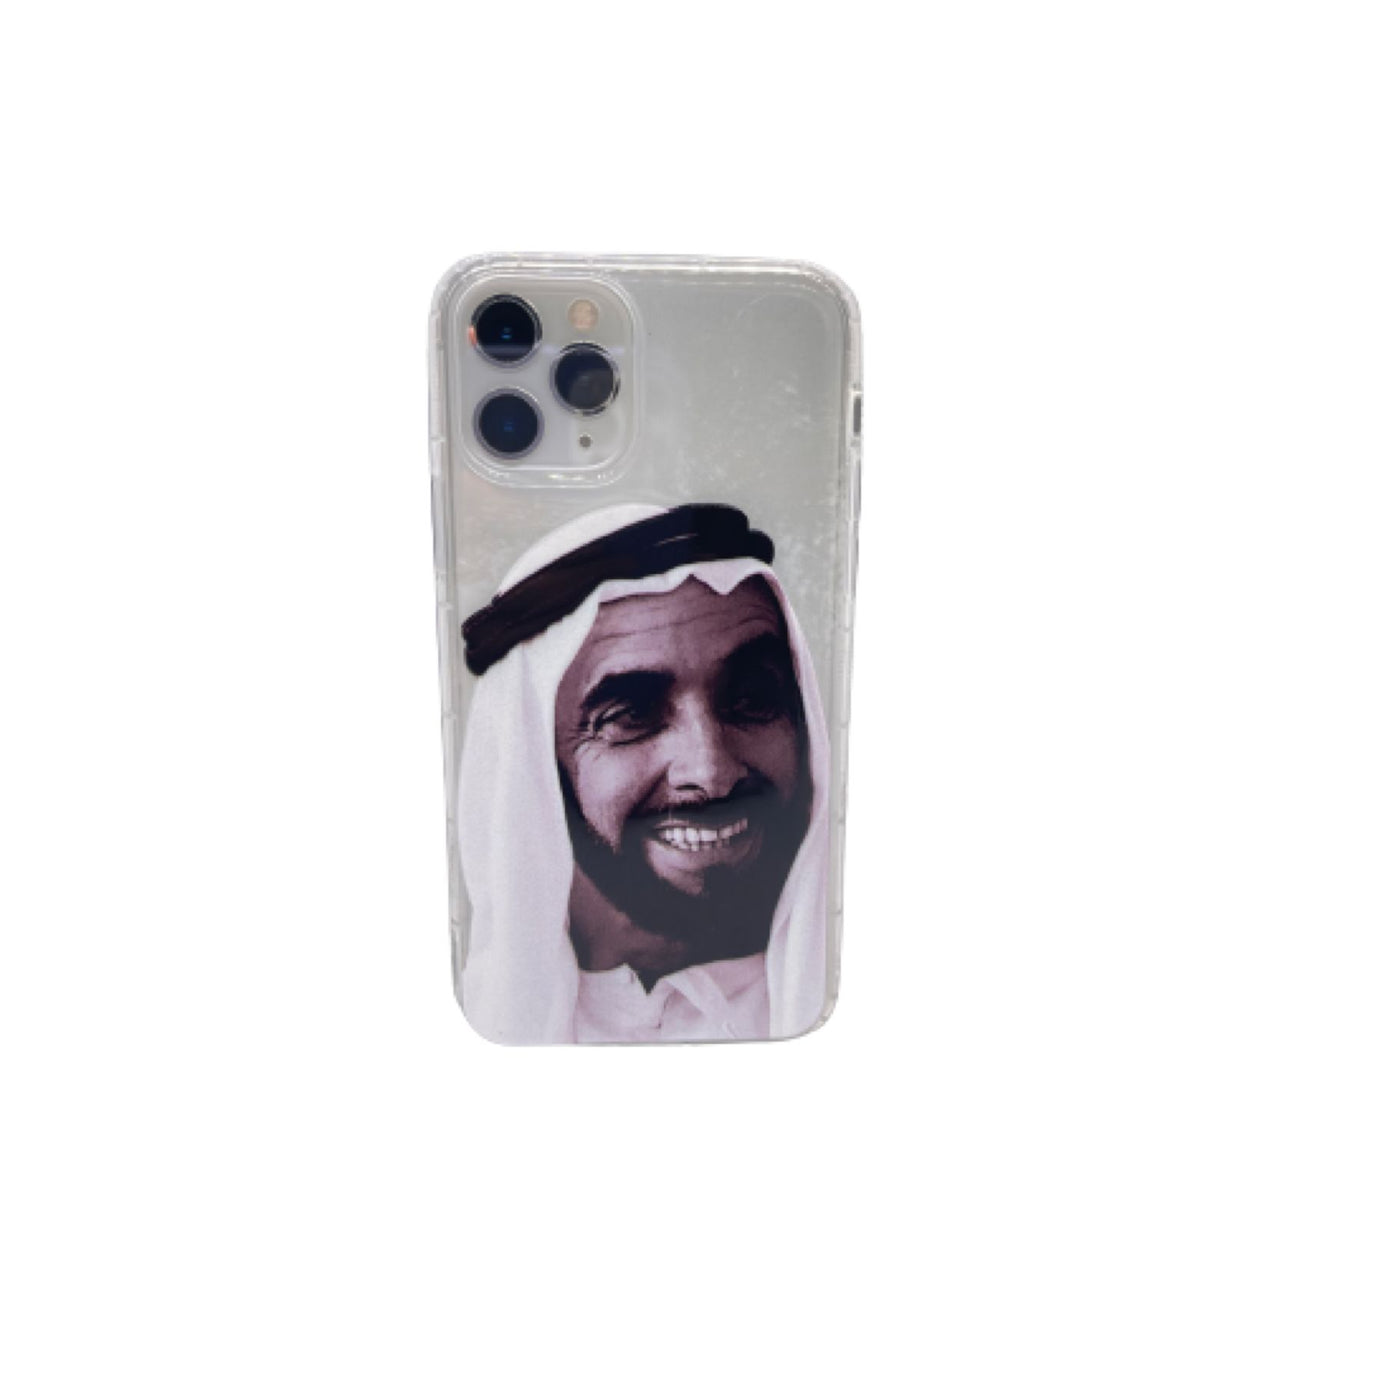 sheik zayed laughing